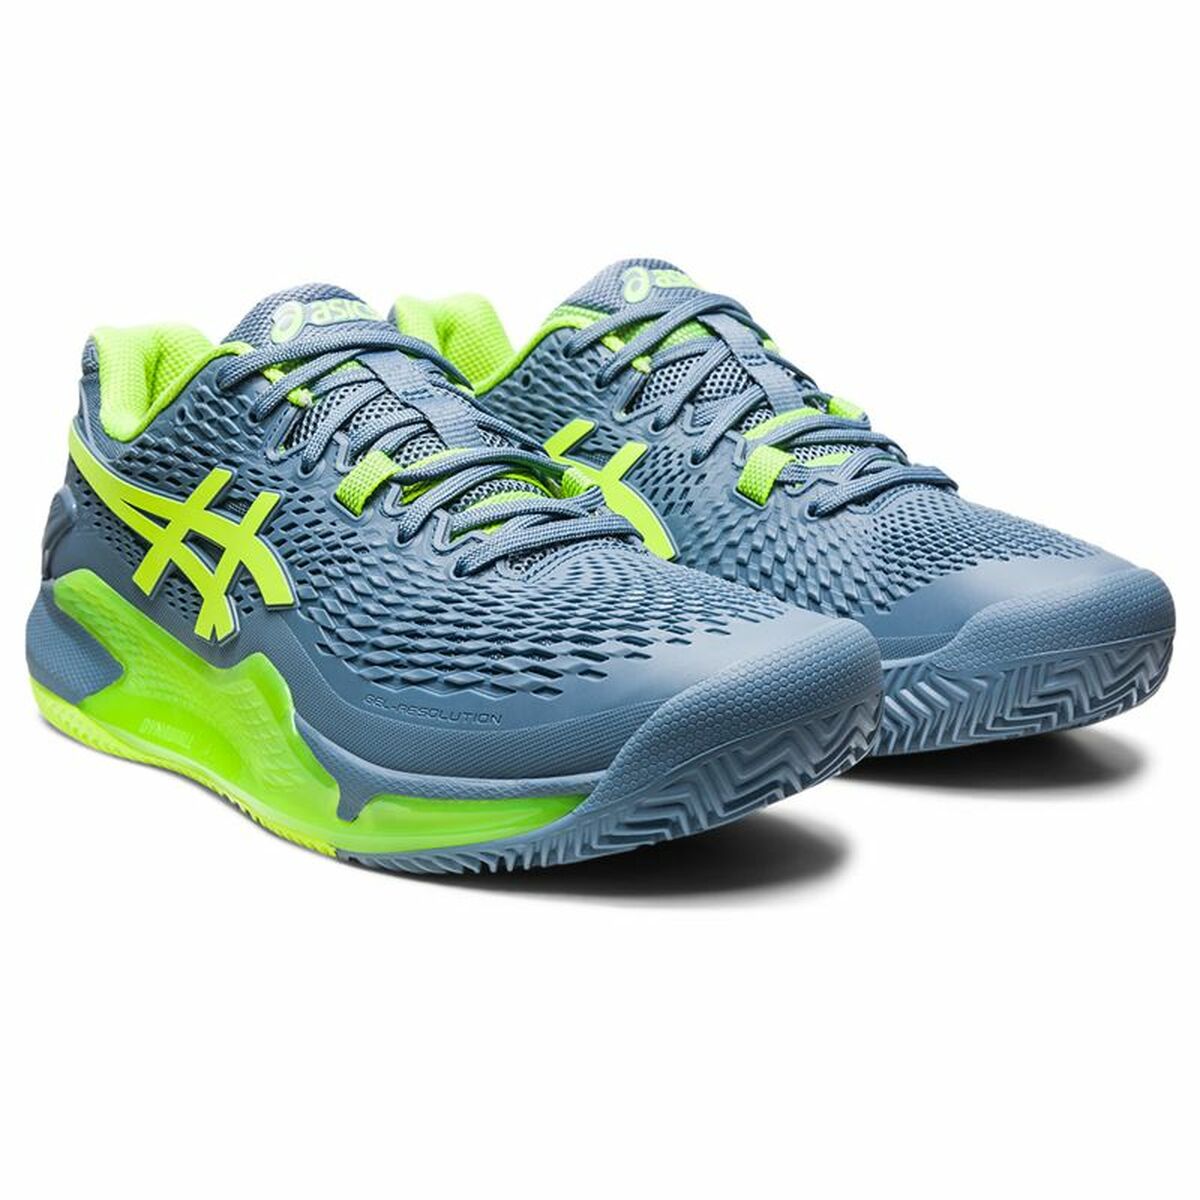 Chaussures de Tennis pour Homme Asics Gel-Resolution 9 Bleu Homme